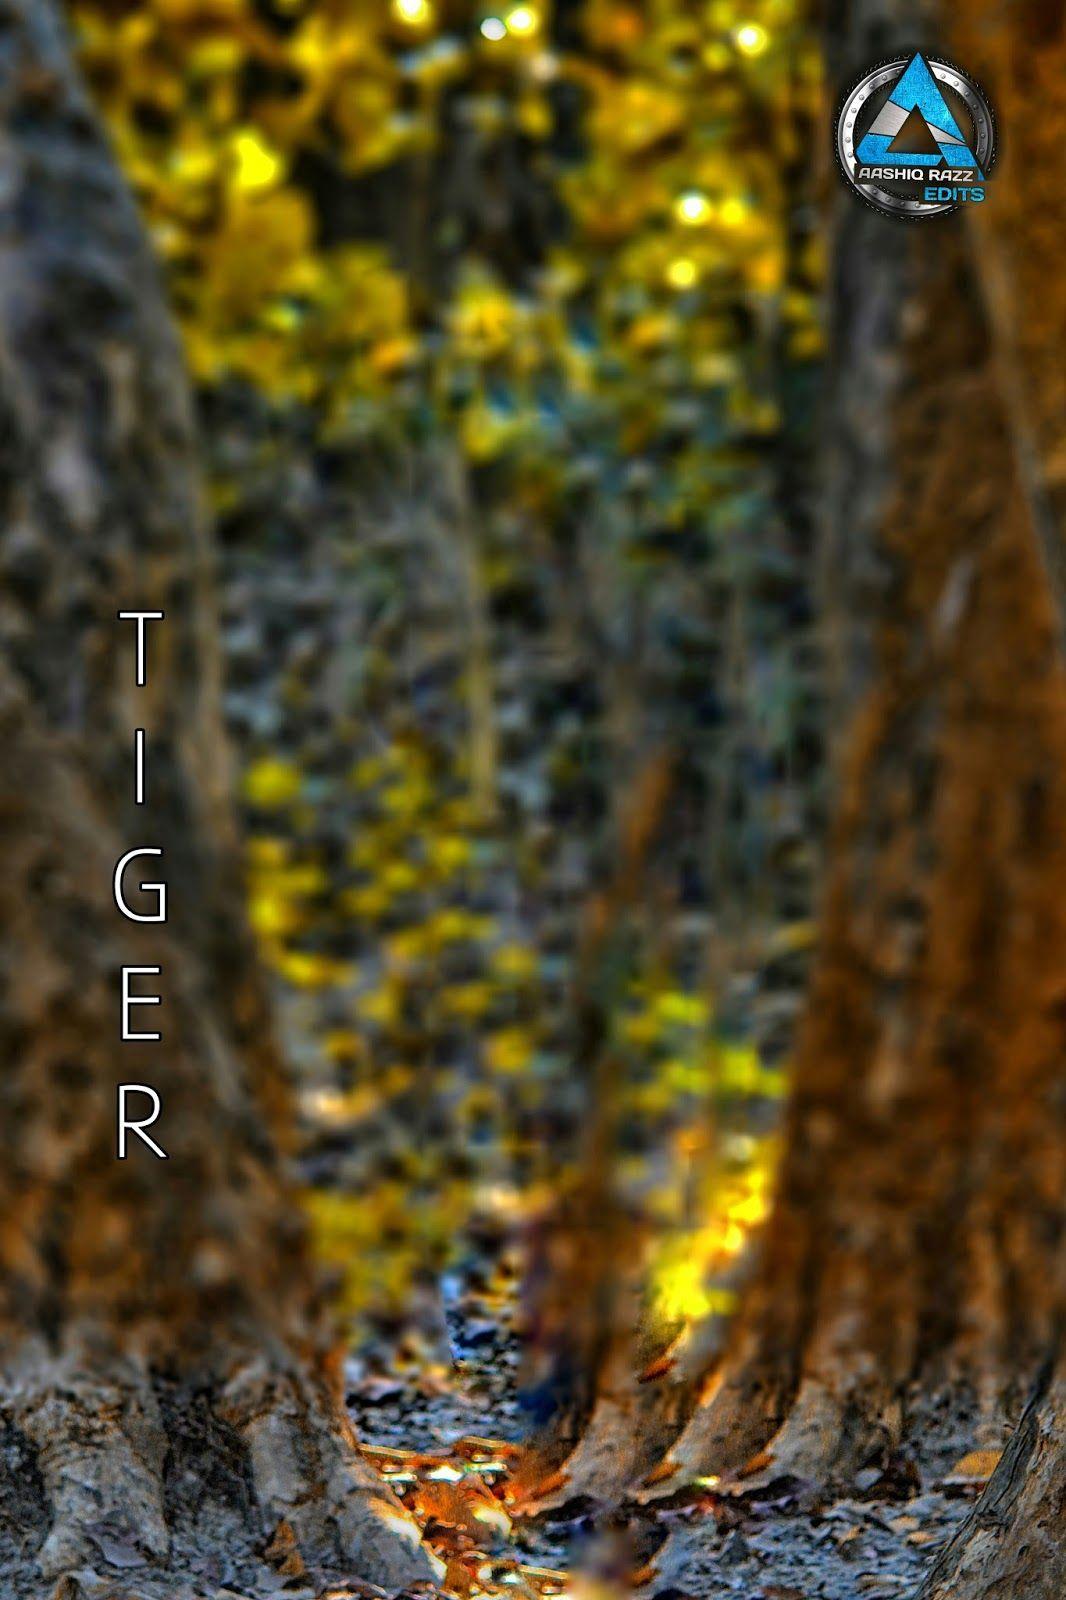 photo editor blur background free download